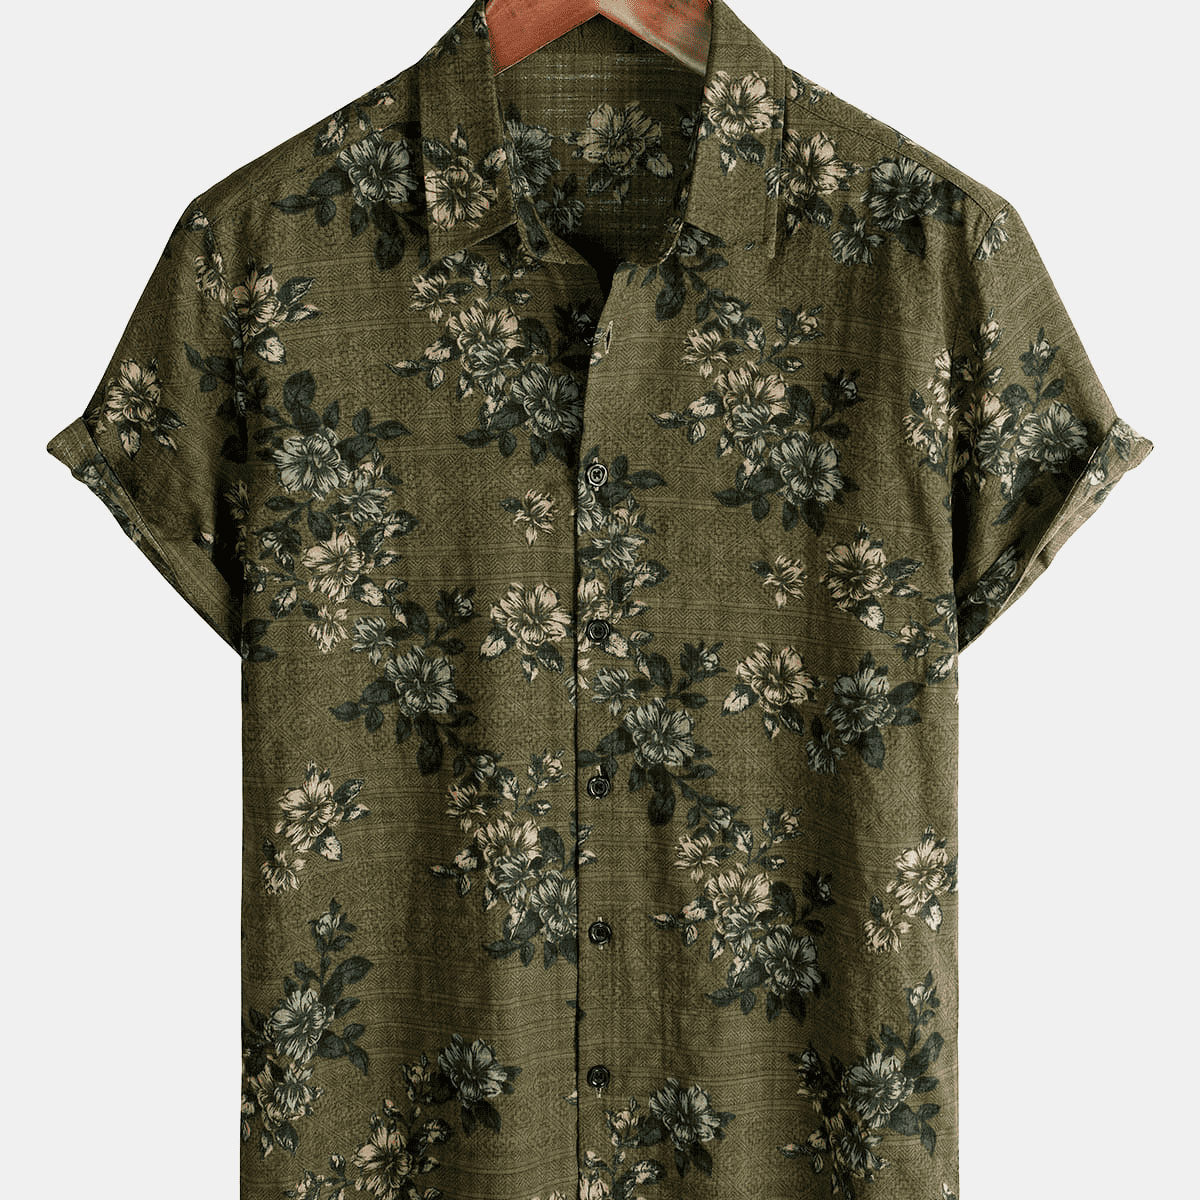 Men's Green Floral Vintage Short Sleeve Retro Summer Cotton Button Up Shirt